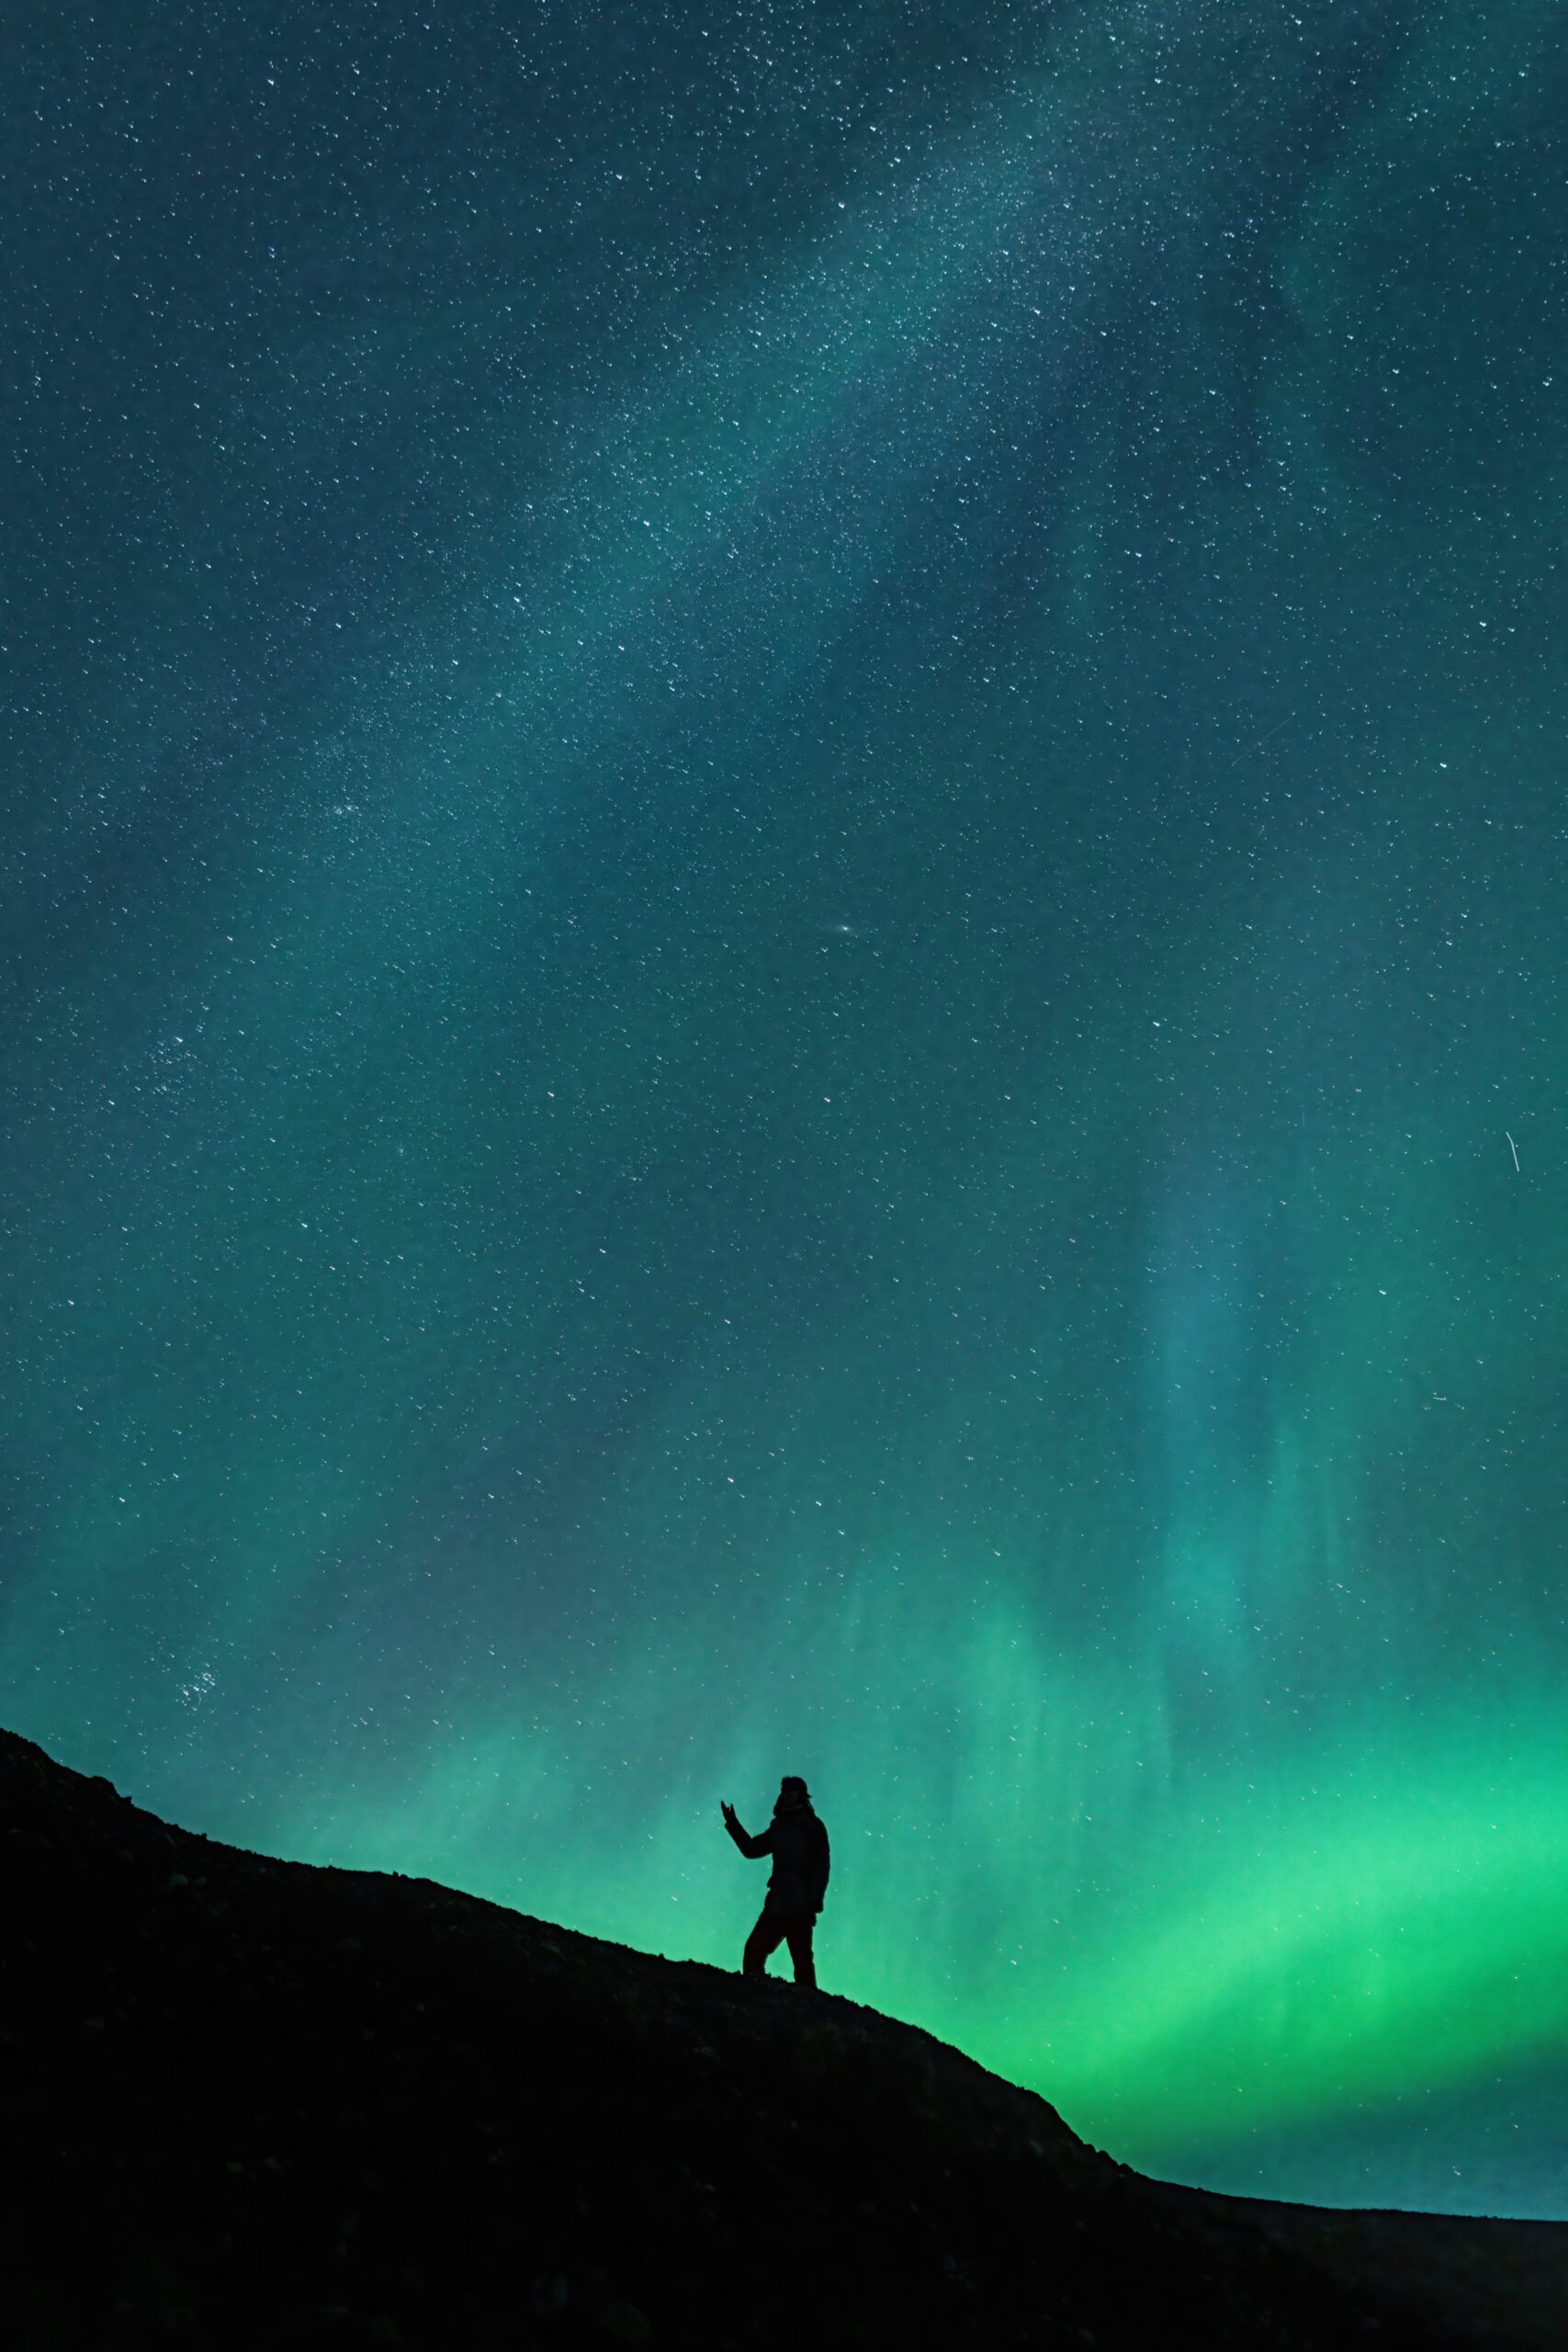 Jaime en Jökúlsarlon cazando auroras — Islandia (Copy)